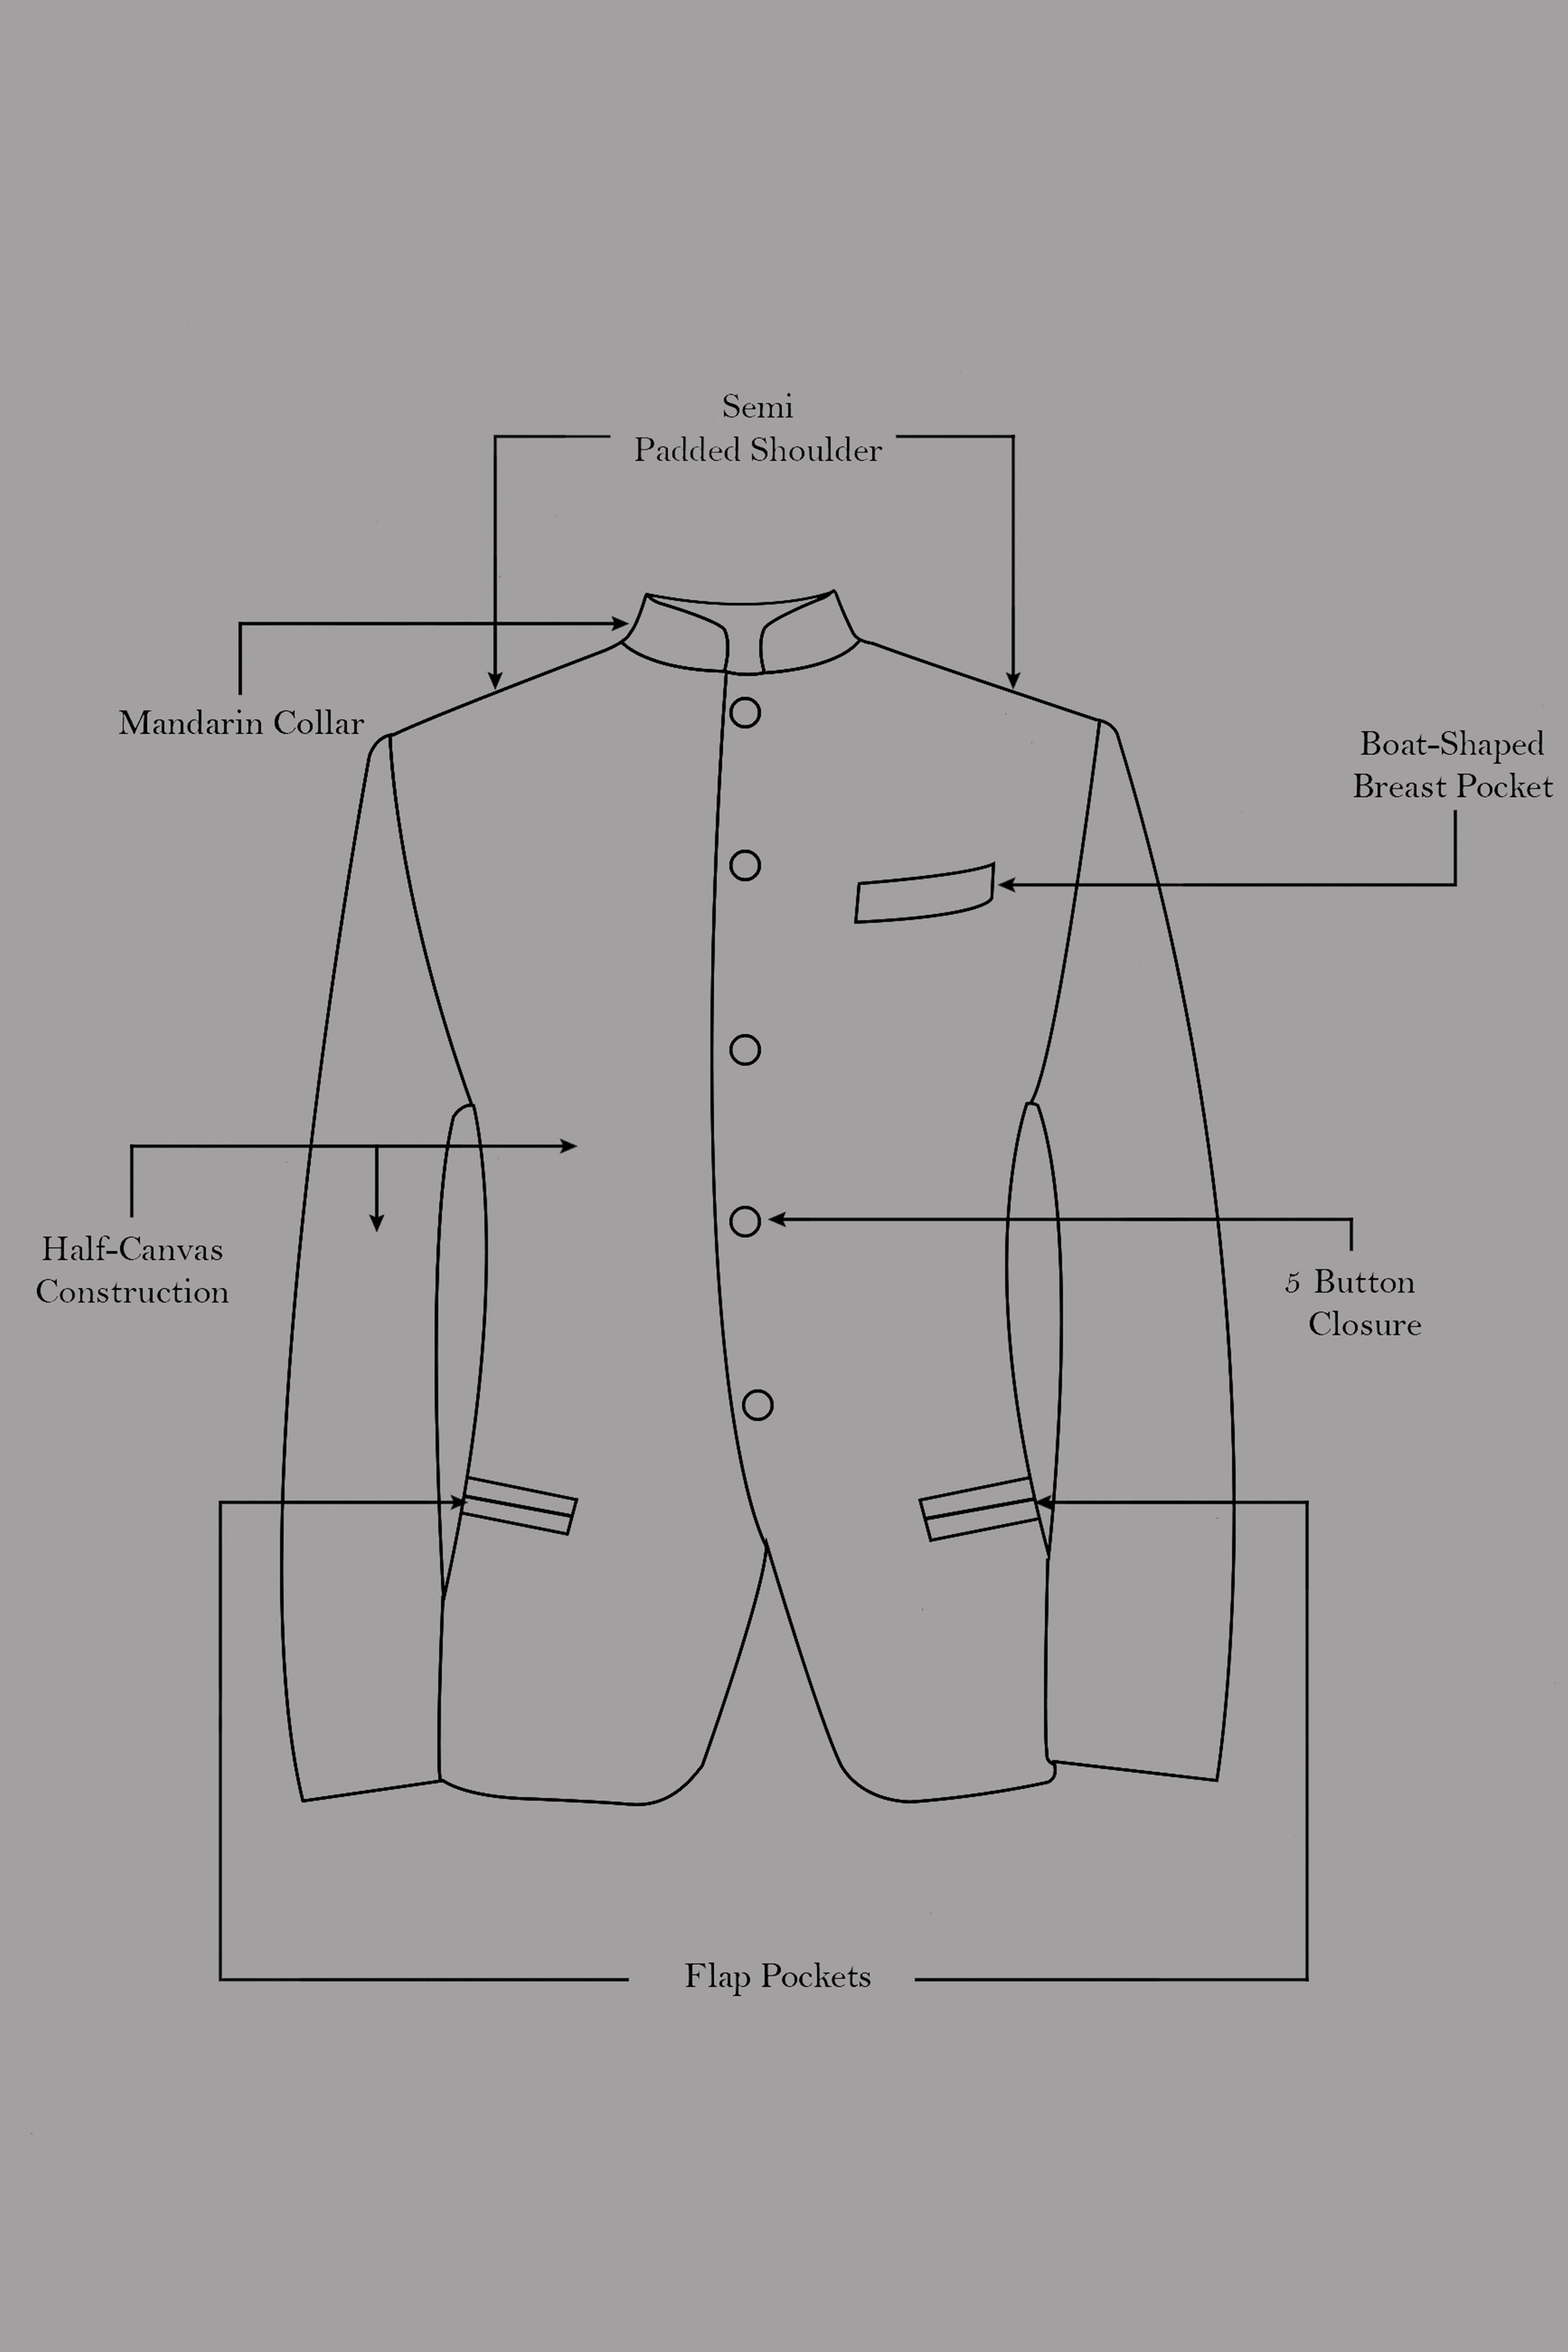 Maize Cream Stretchable Bandhgala Premium Cotton Traveler Suit